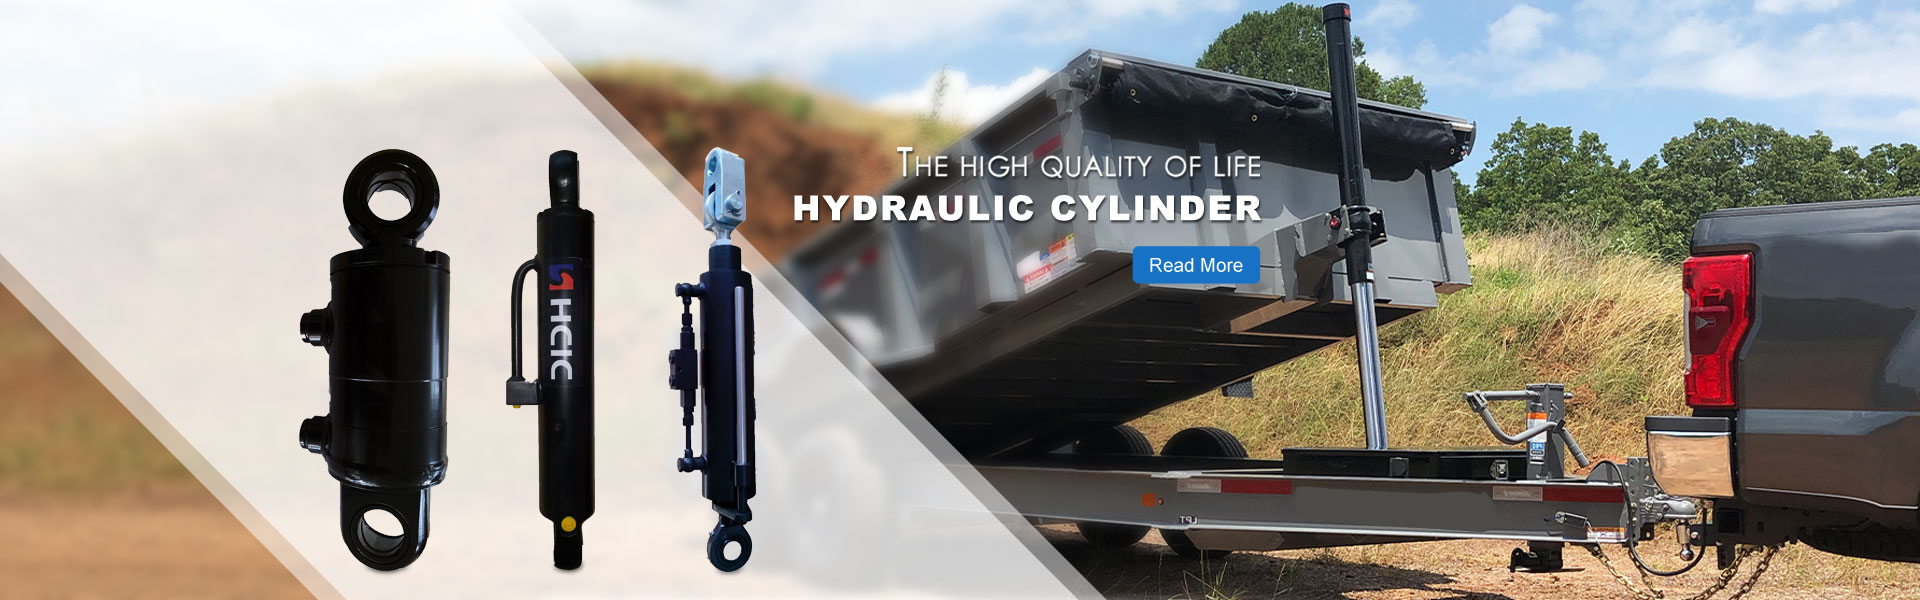 Hydraulic Cylinder Manufacturers